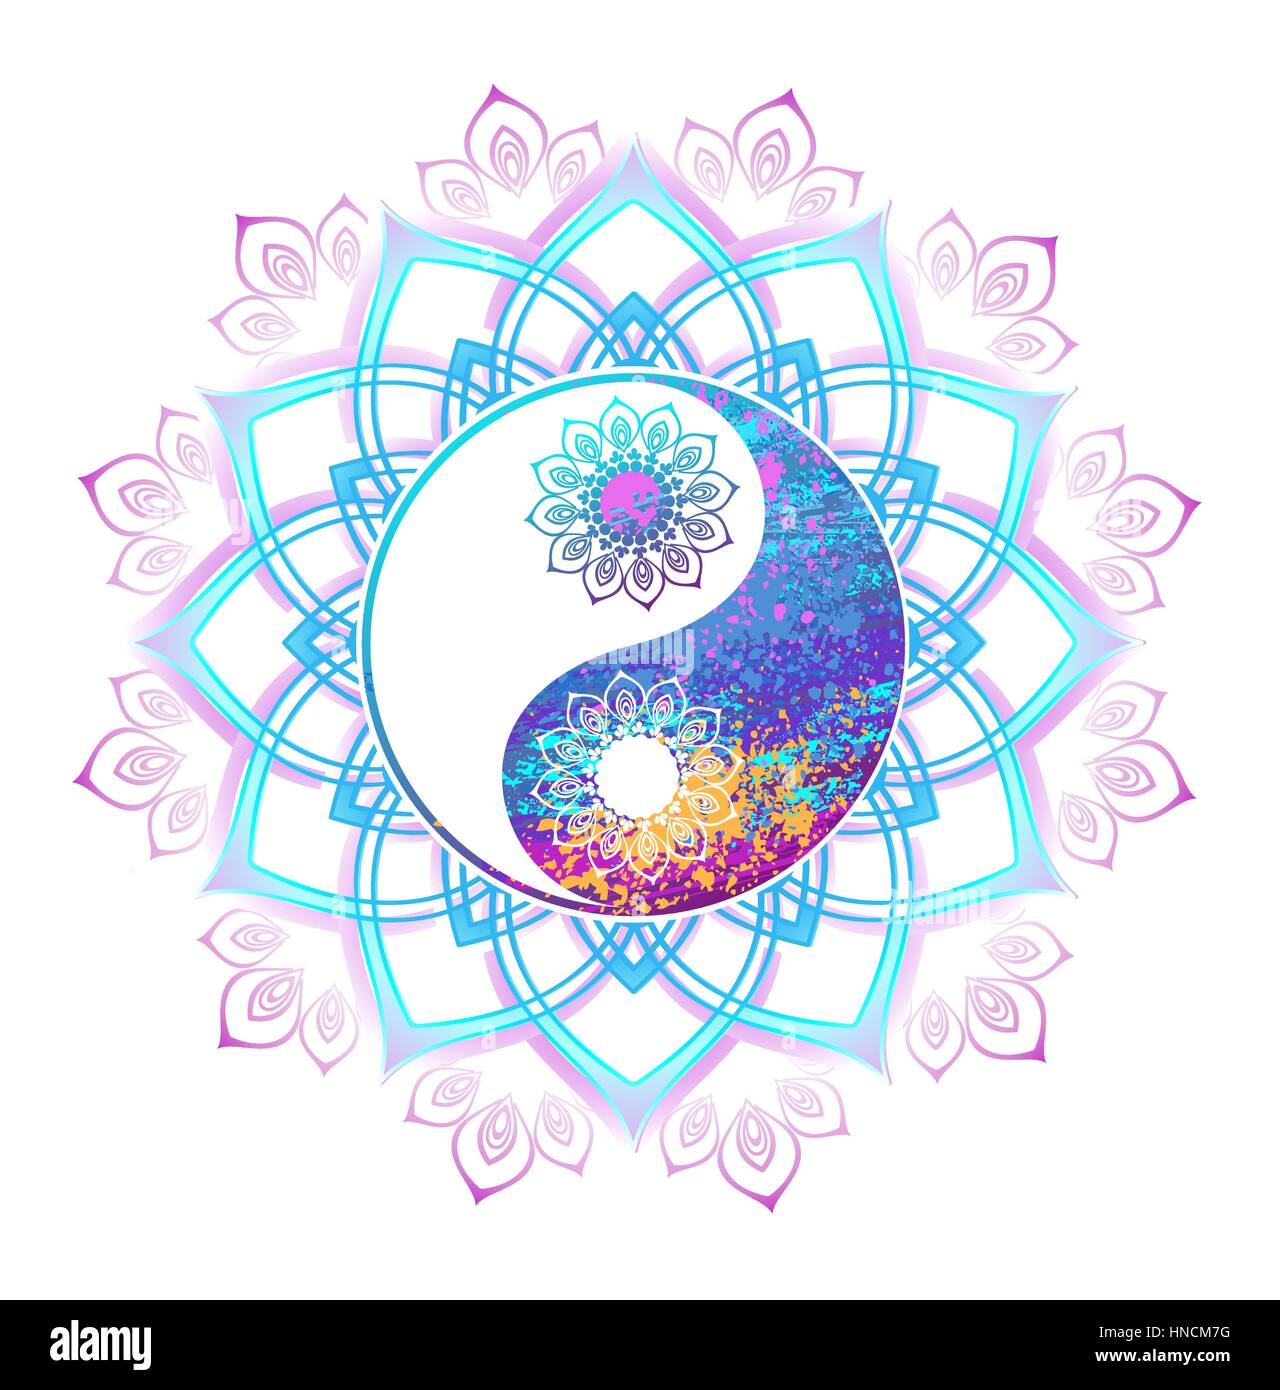 Yin-Yang-Symbol gemalt hell Pastell malen ein Mandala auf weißem  Hintergrund. Yin-Yang-Symbol. Orientalische Muster. Boho-Stil  Stock-Vektorgrafik - Alamy